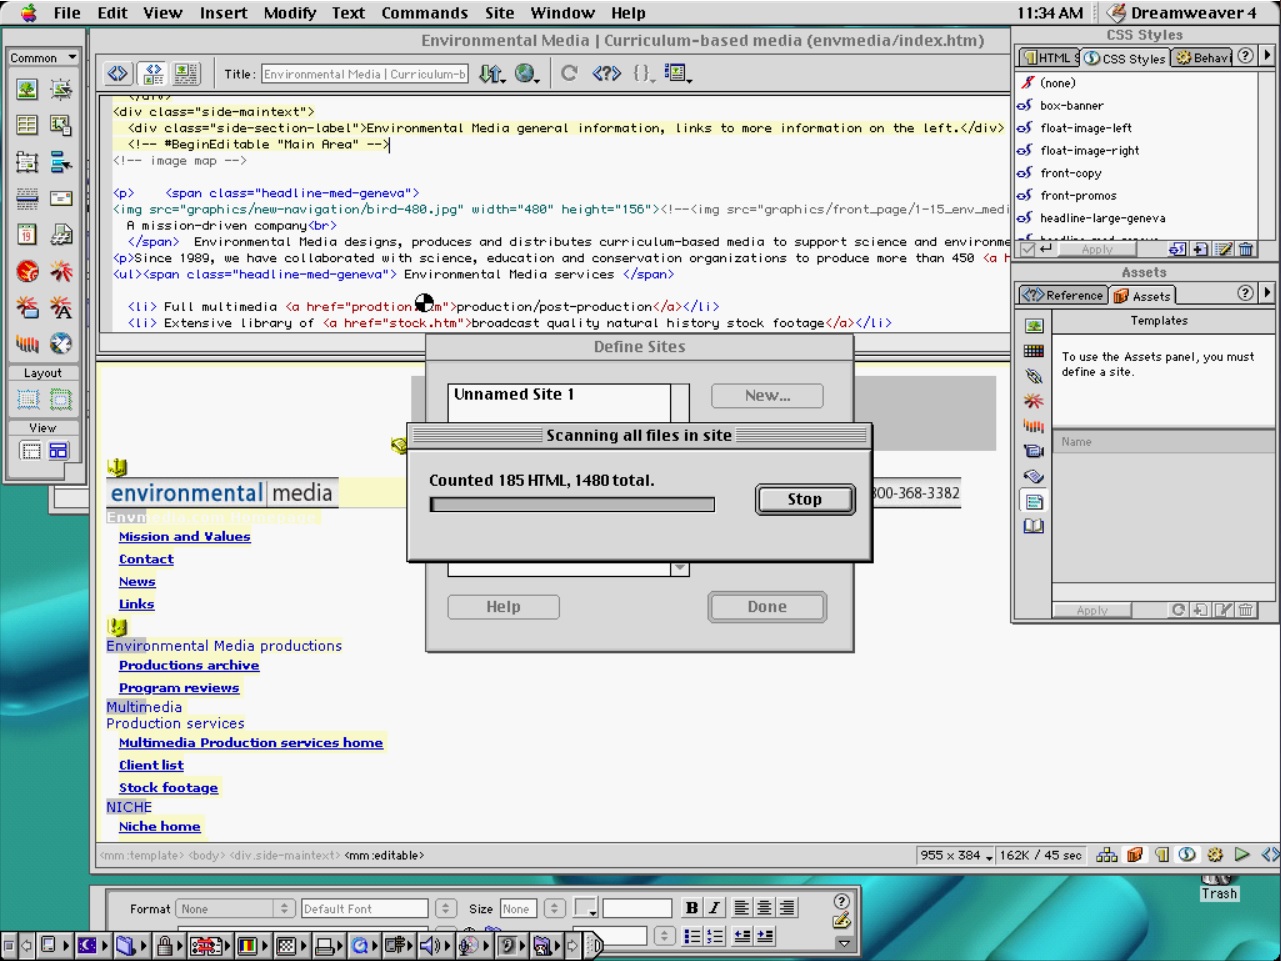 Dreamweaver 4 circa 2000 as it scanned a website's files.